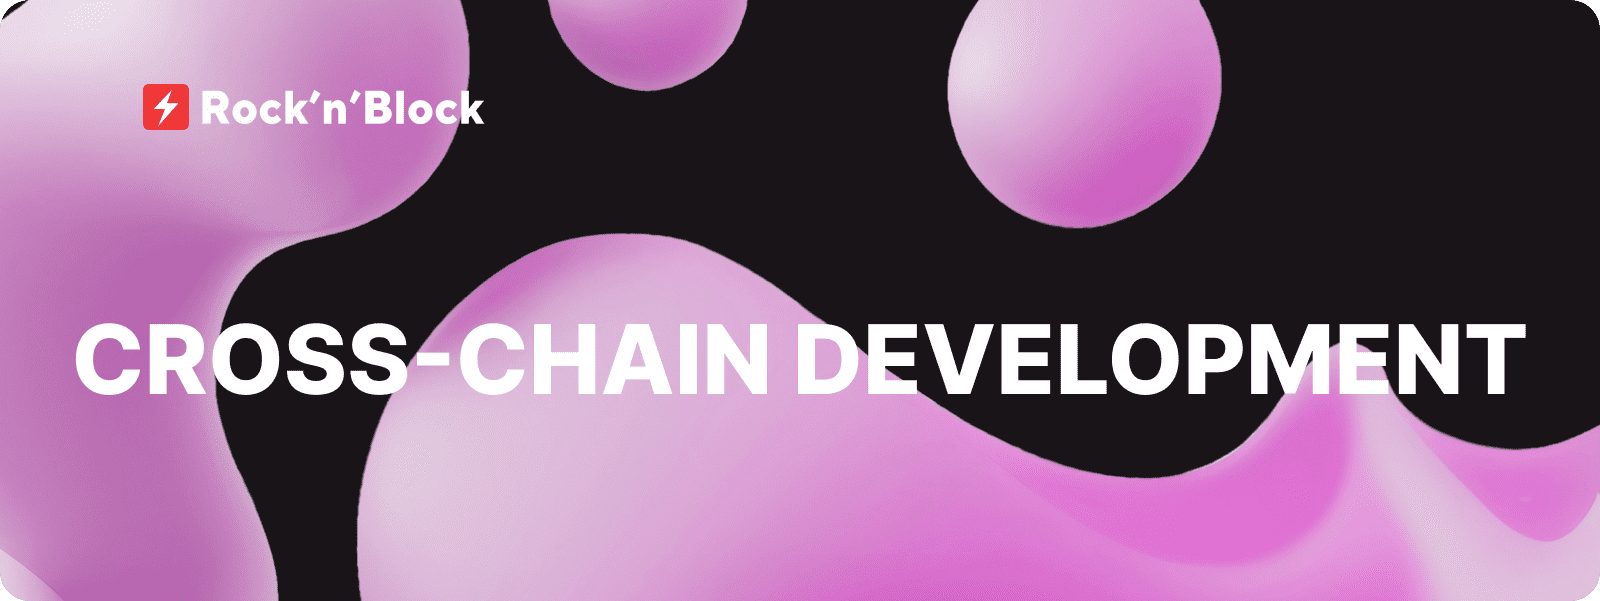 What Is Cross-Chain Development?